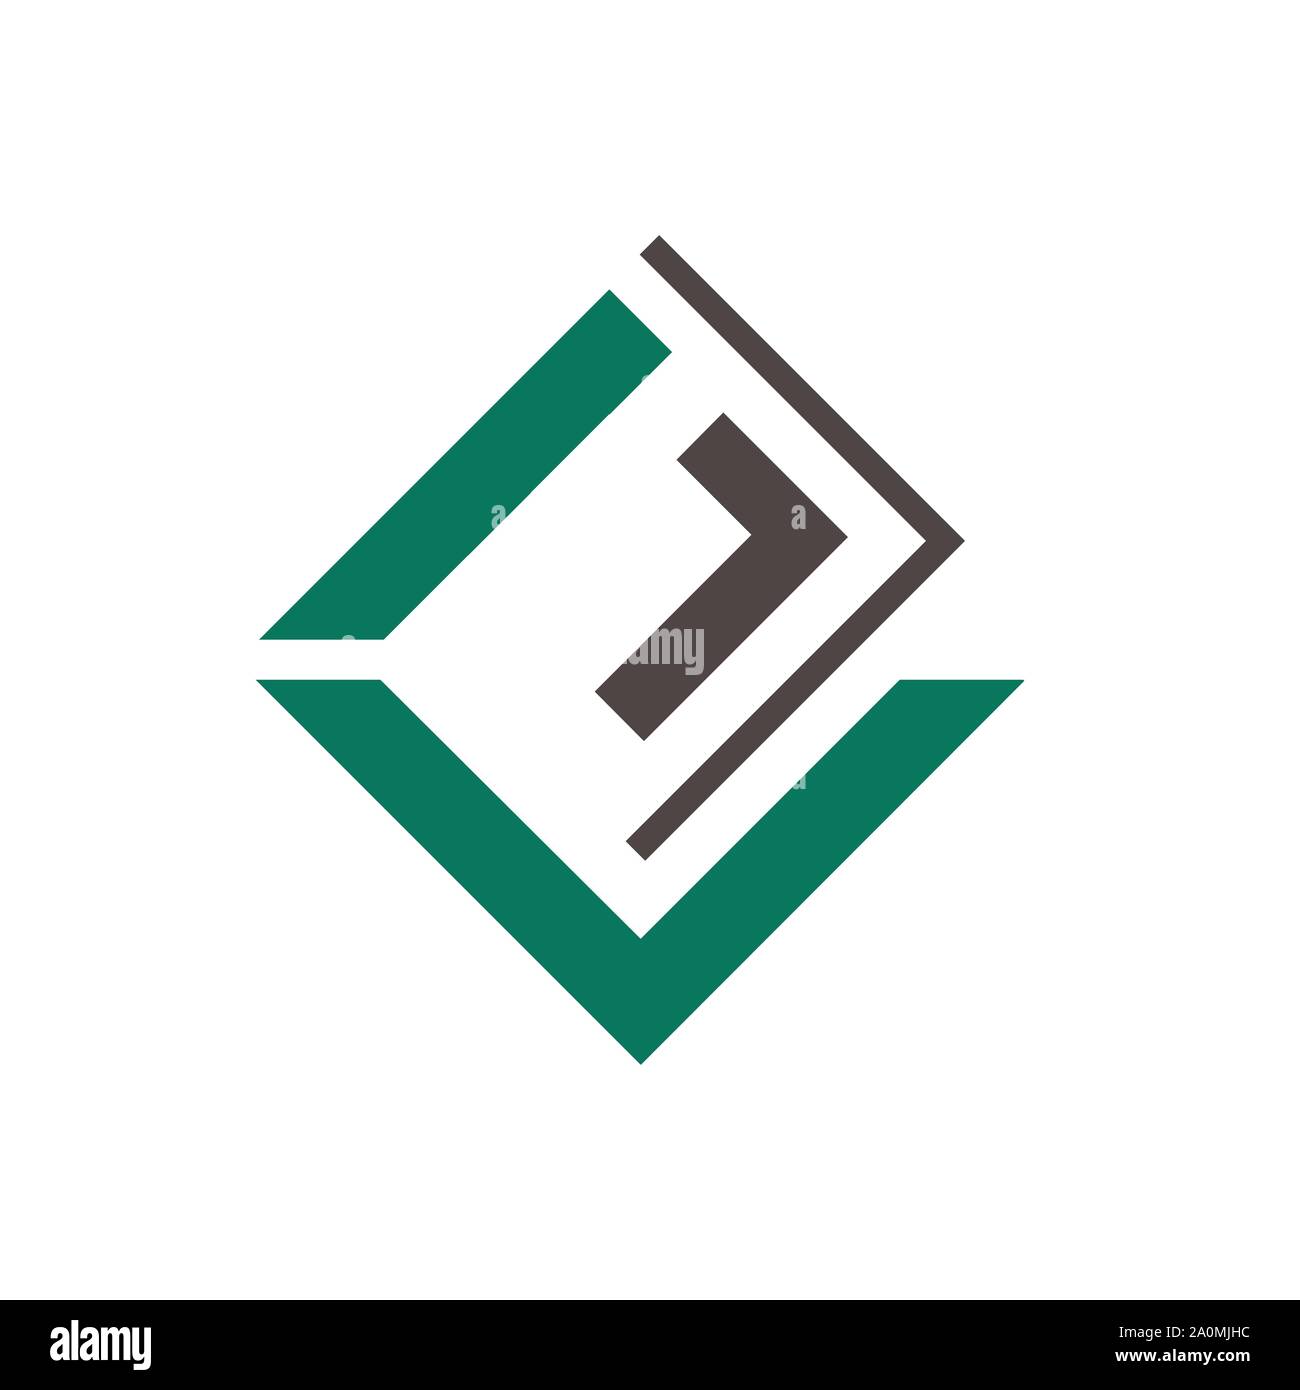 Secured public Self Storage Logo Design vector illustration Stock Vector